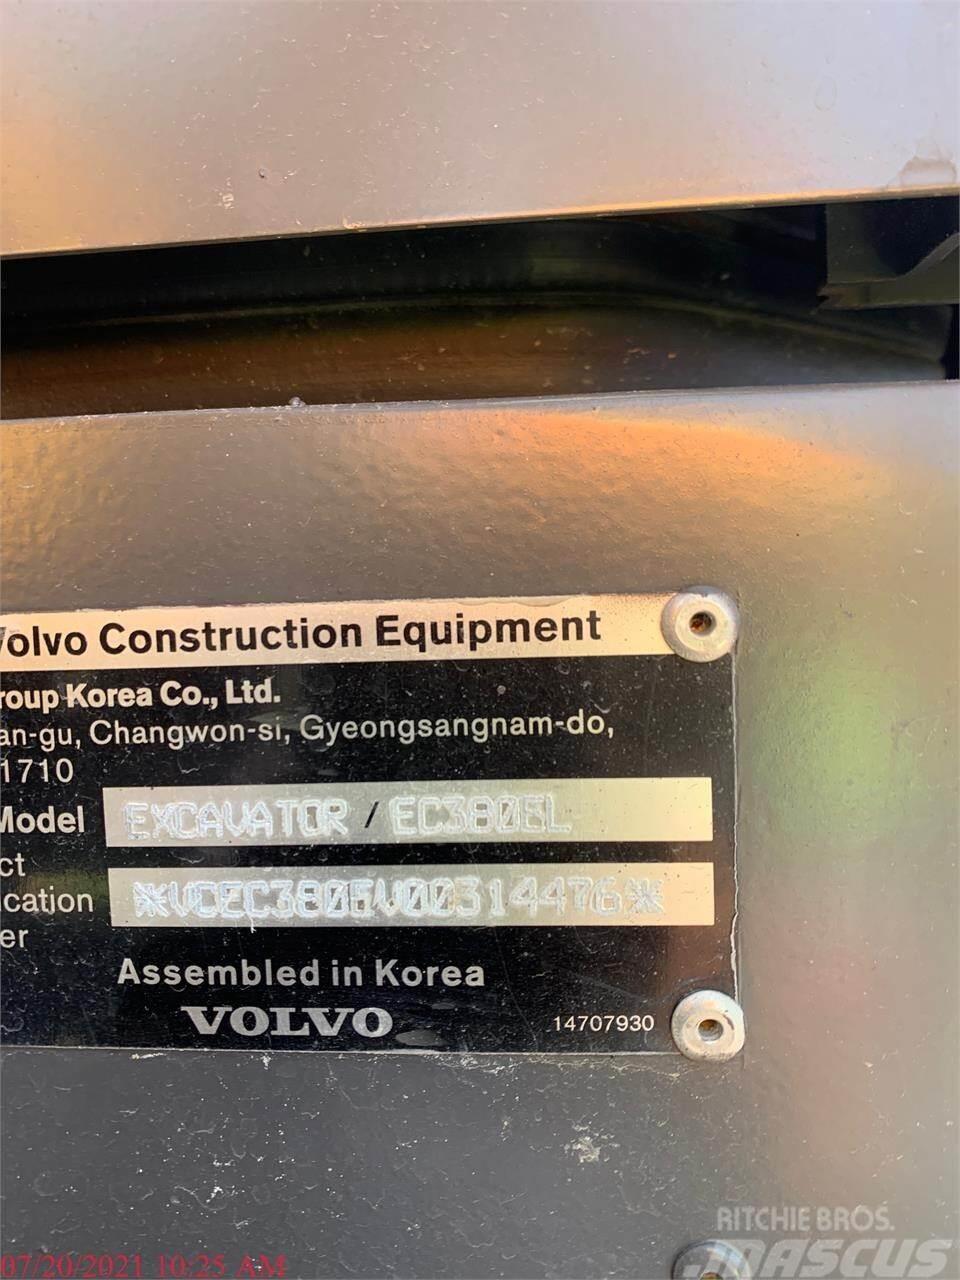 Volvo EC380EL Gravemaskiner på larvebånd